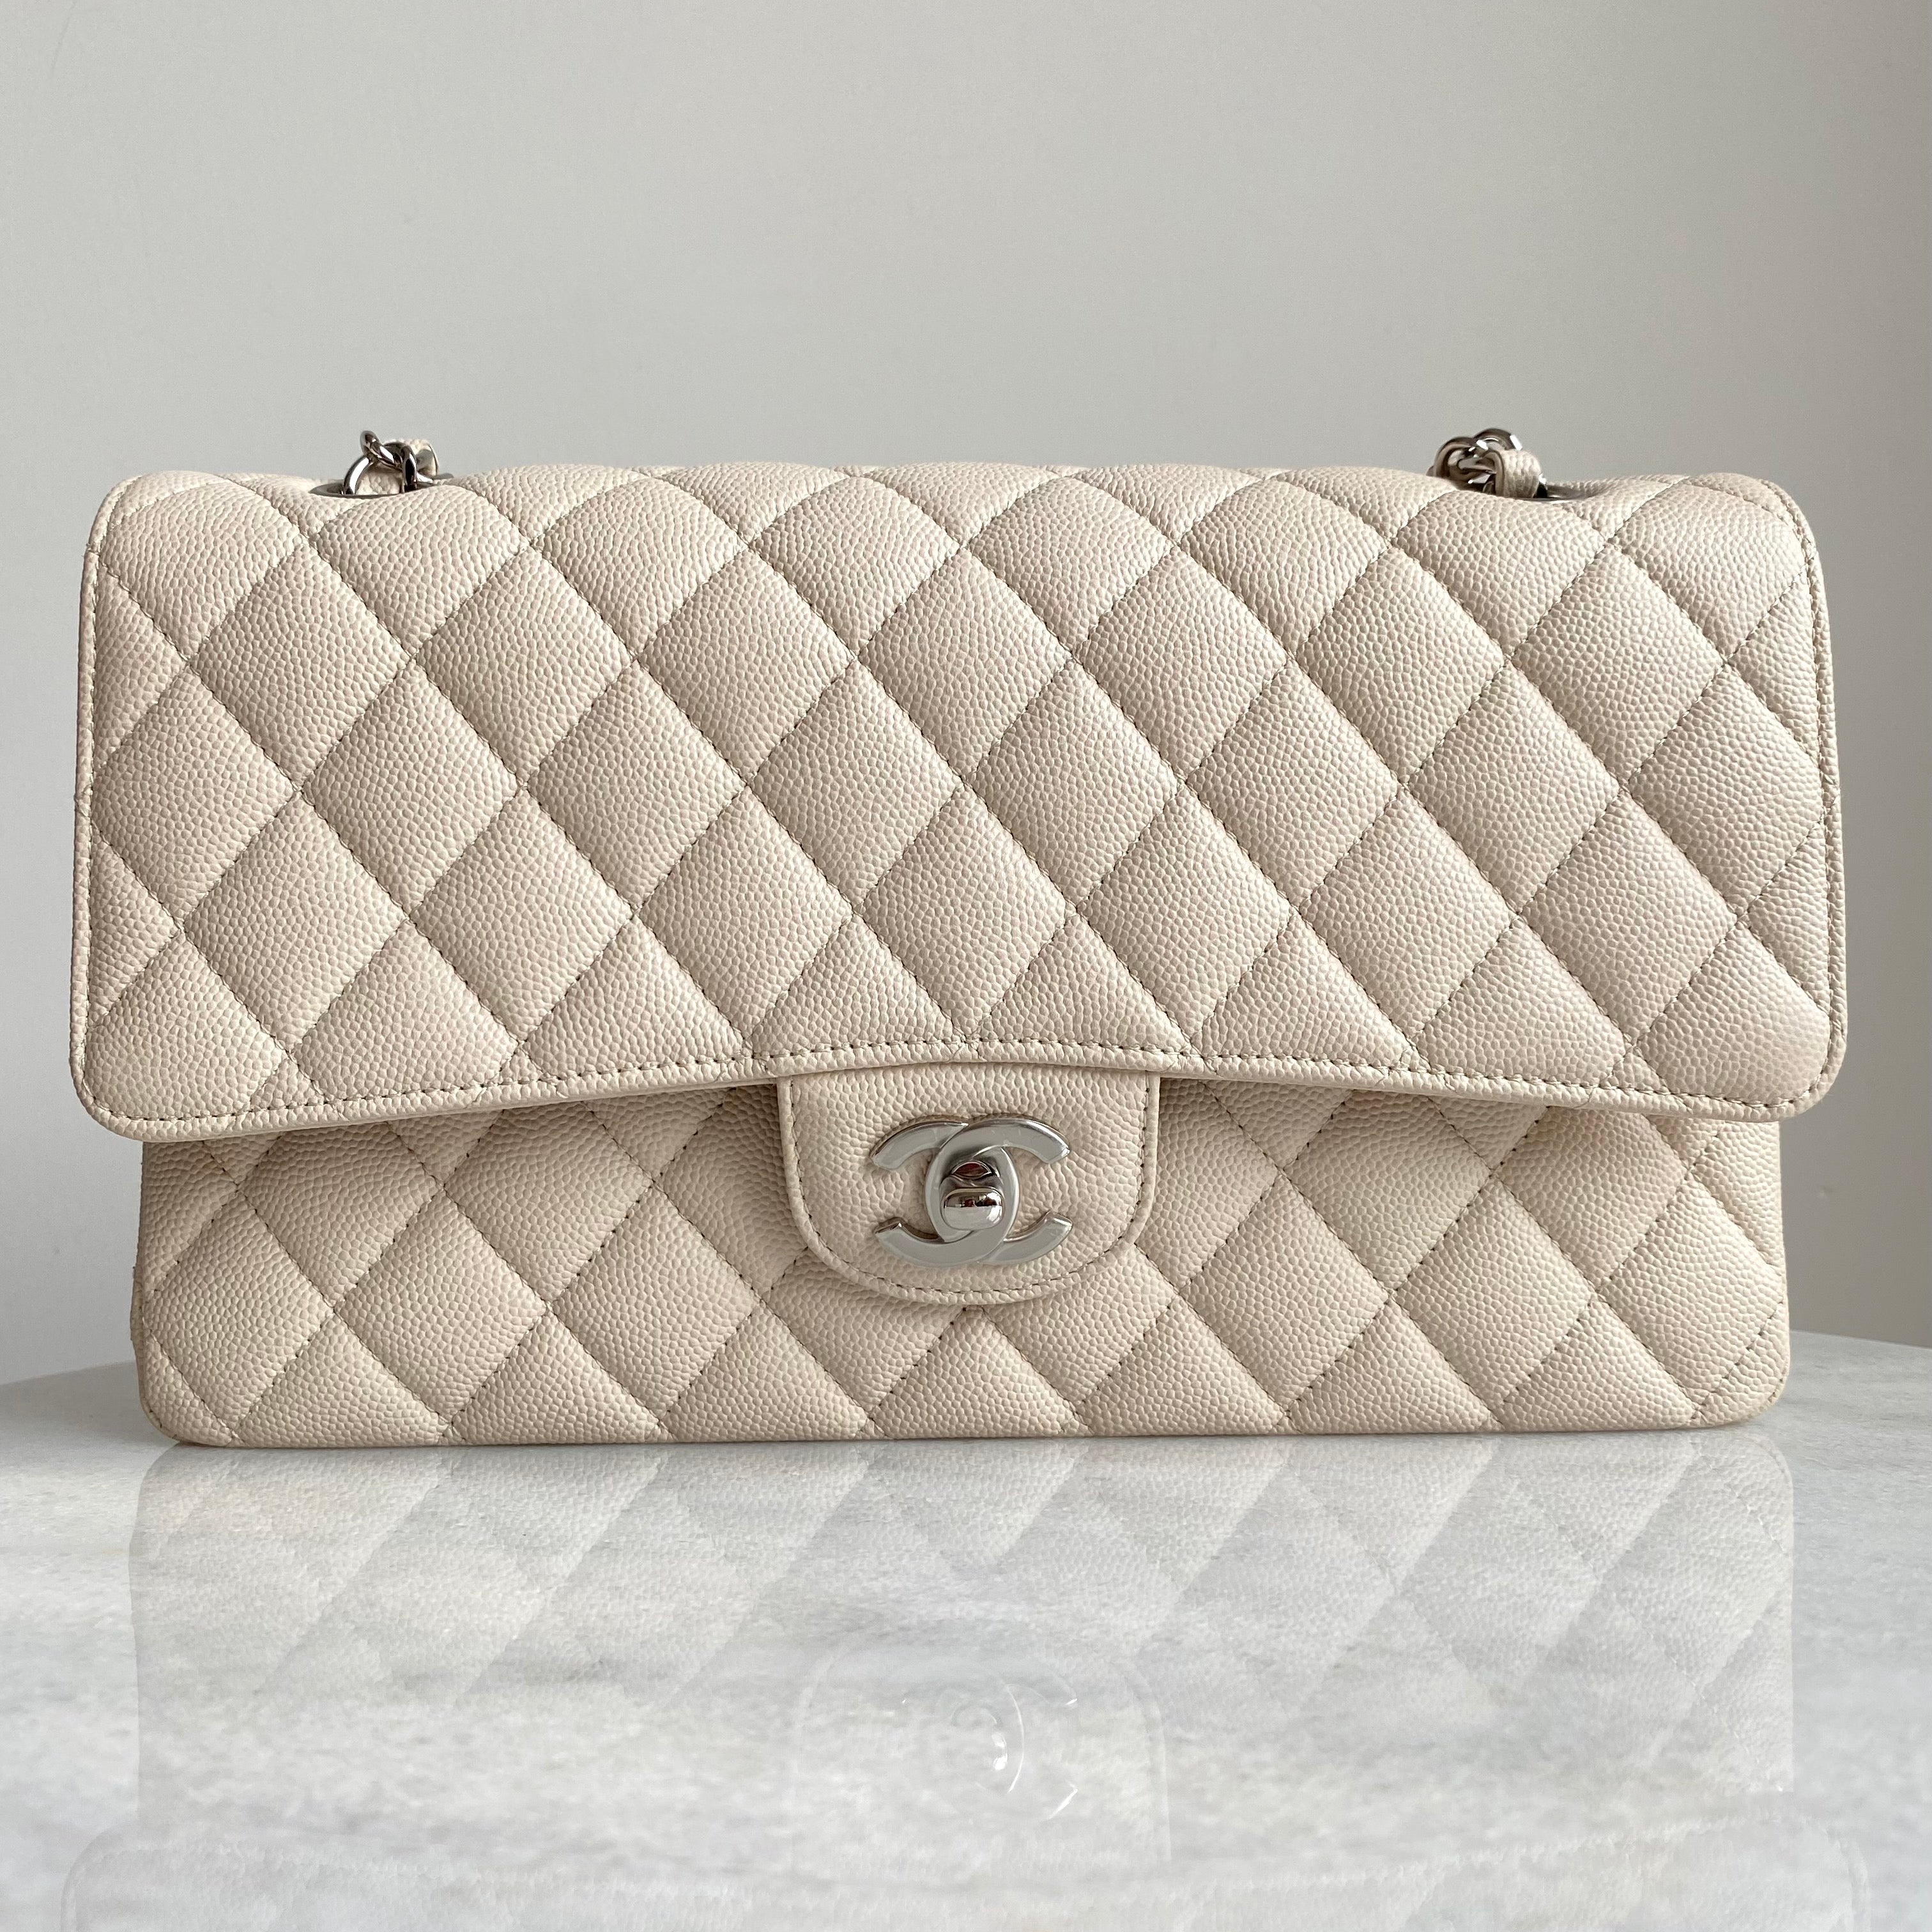 Chanel Timeless handbag in beige suede, Hypebae